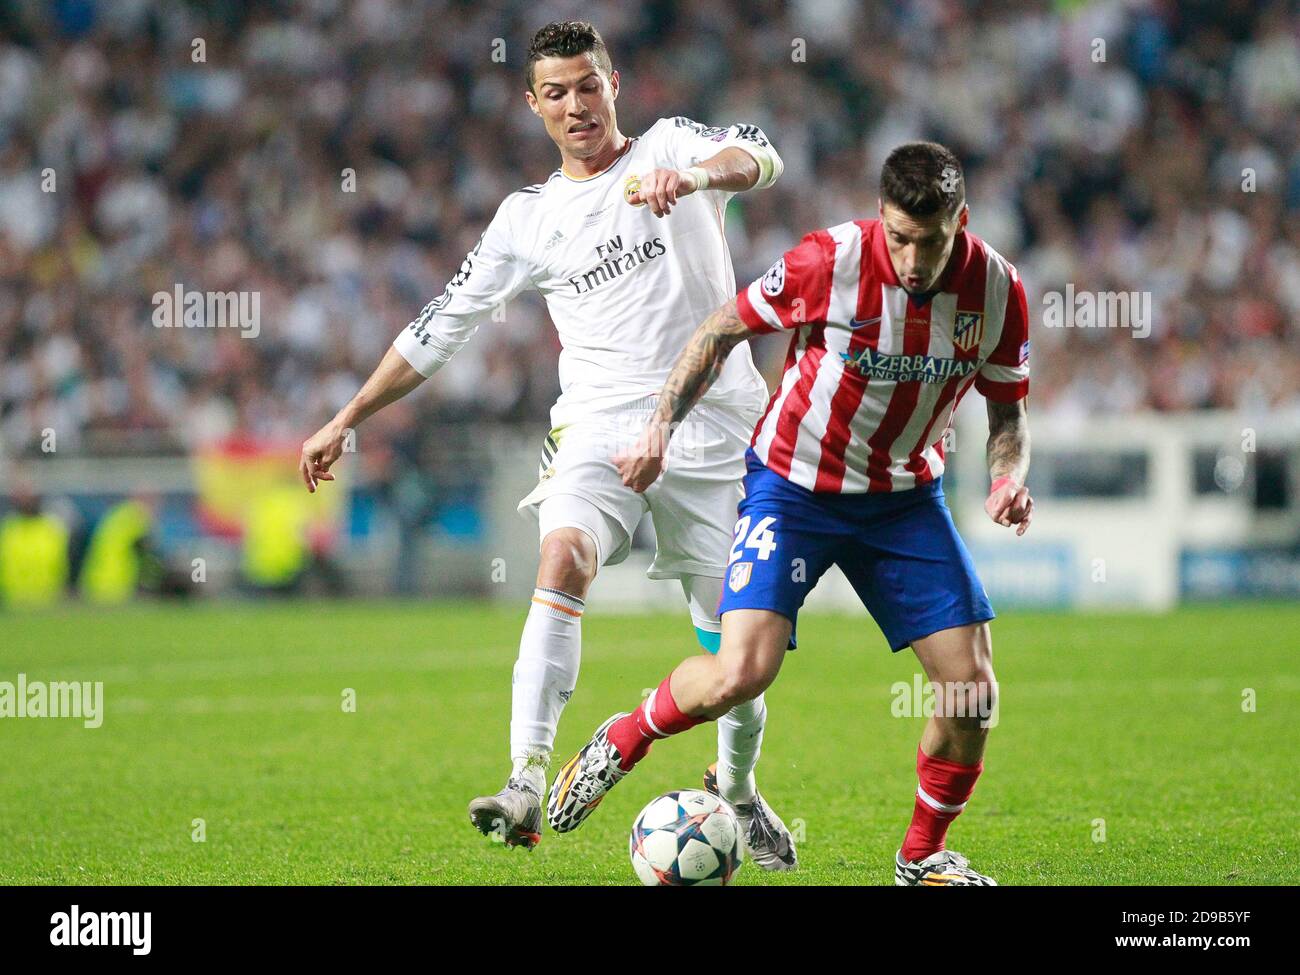 Cristiano Ronaldo of Real Madrid and José Ernesto Sosa of Atletico Madrid  during the Champion League